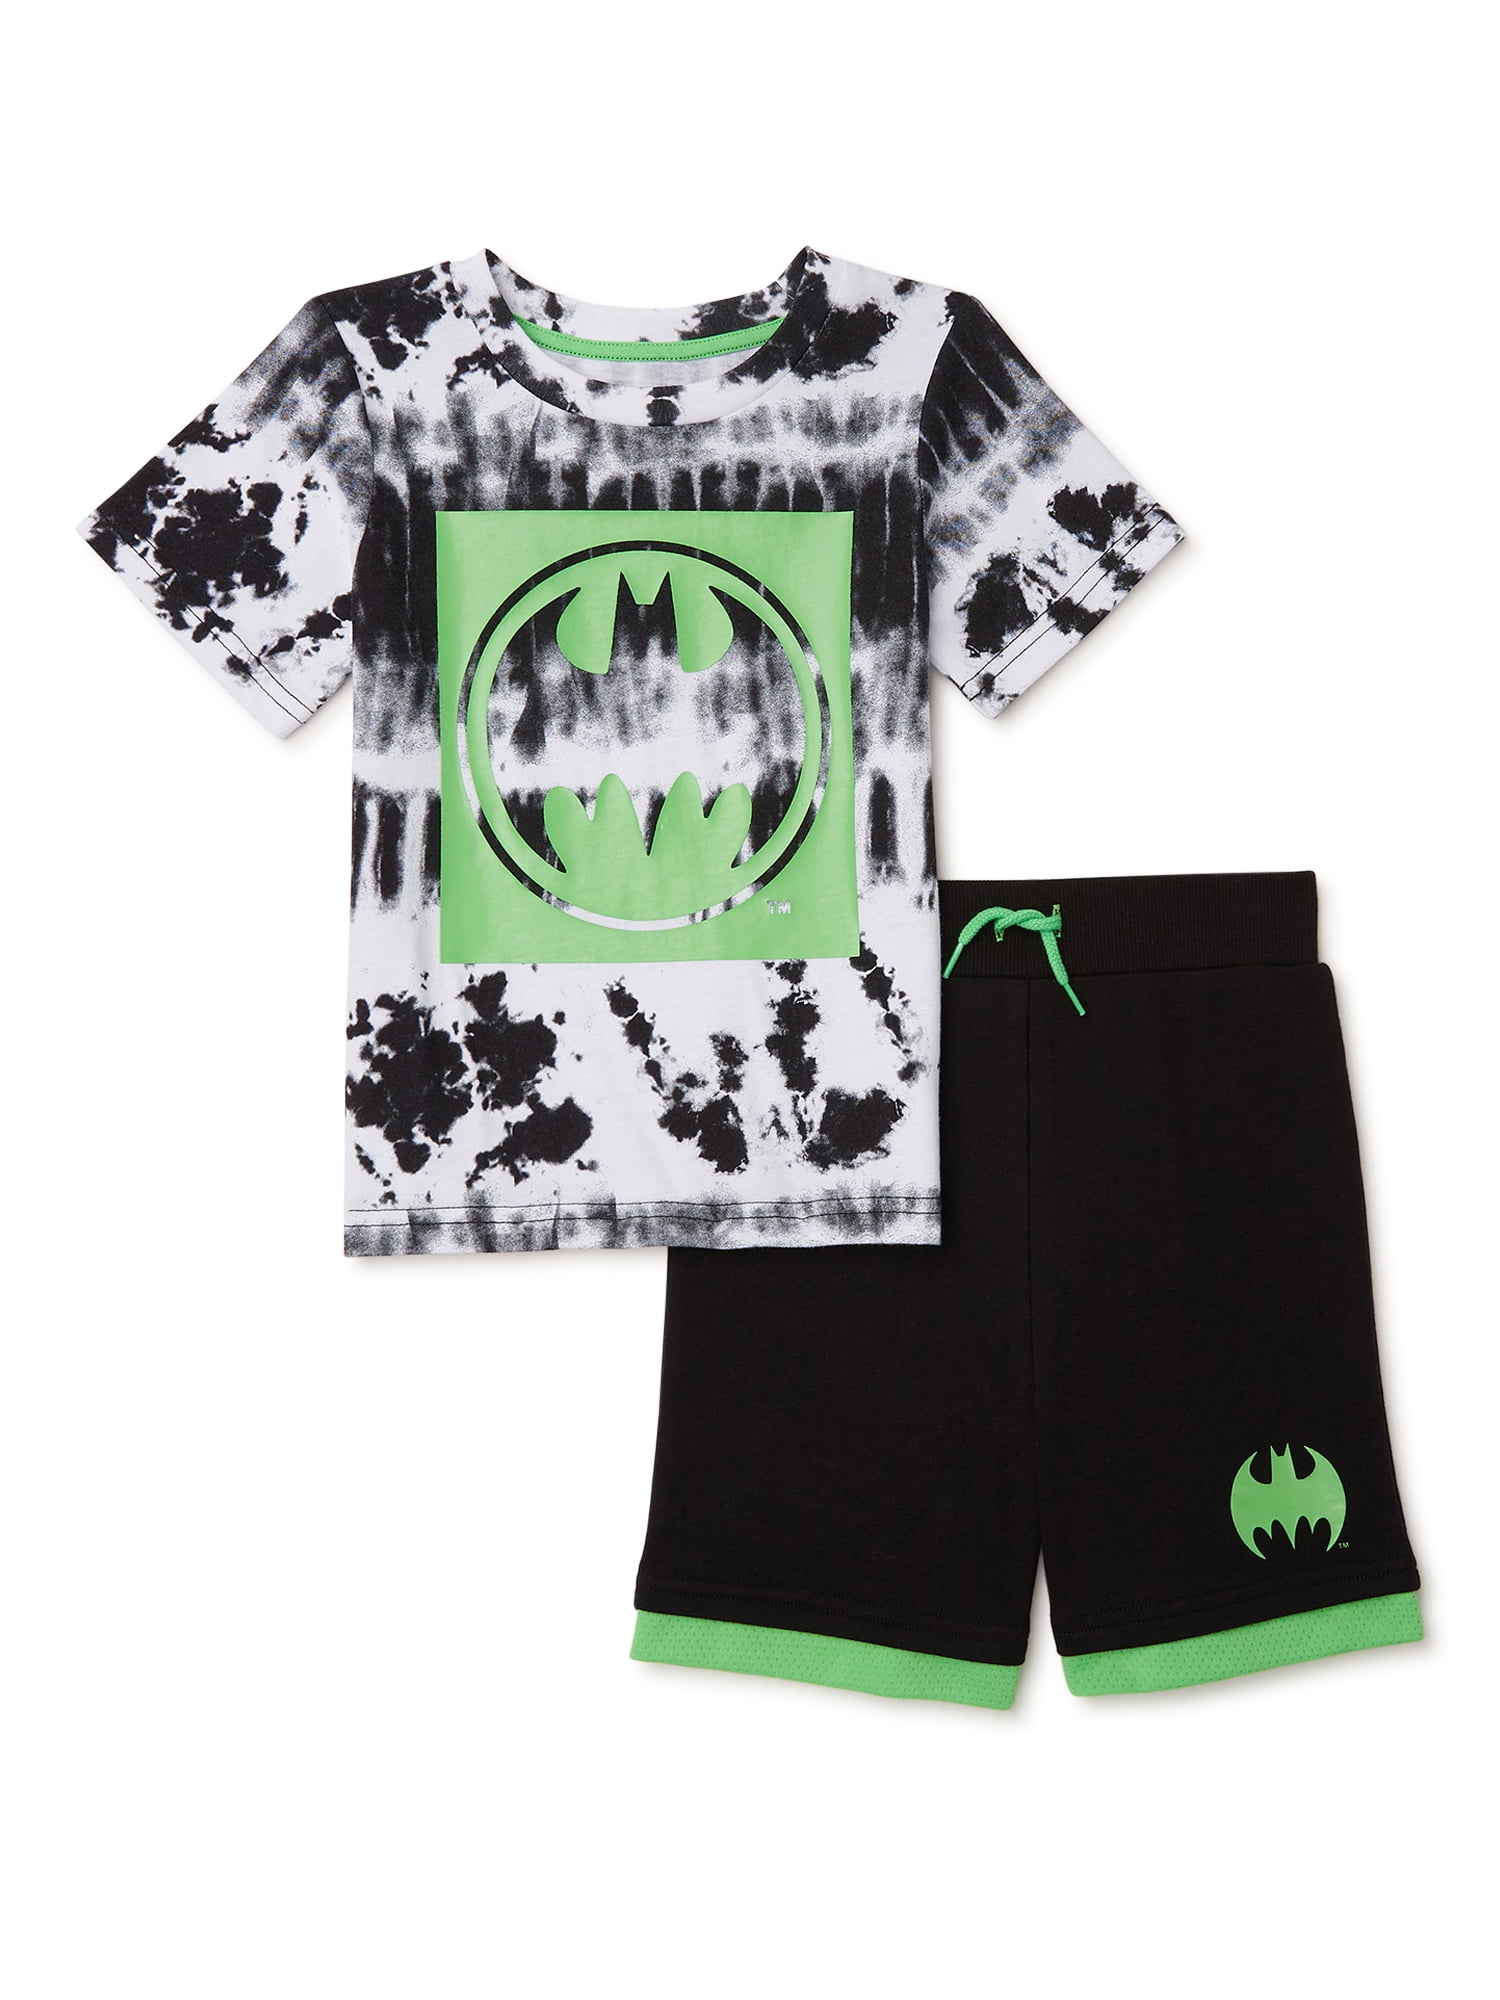 Batman & the Dark Knight white/black Short Sleeve T-shirt & gray shorts 3pc set 